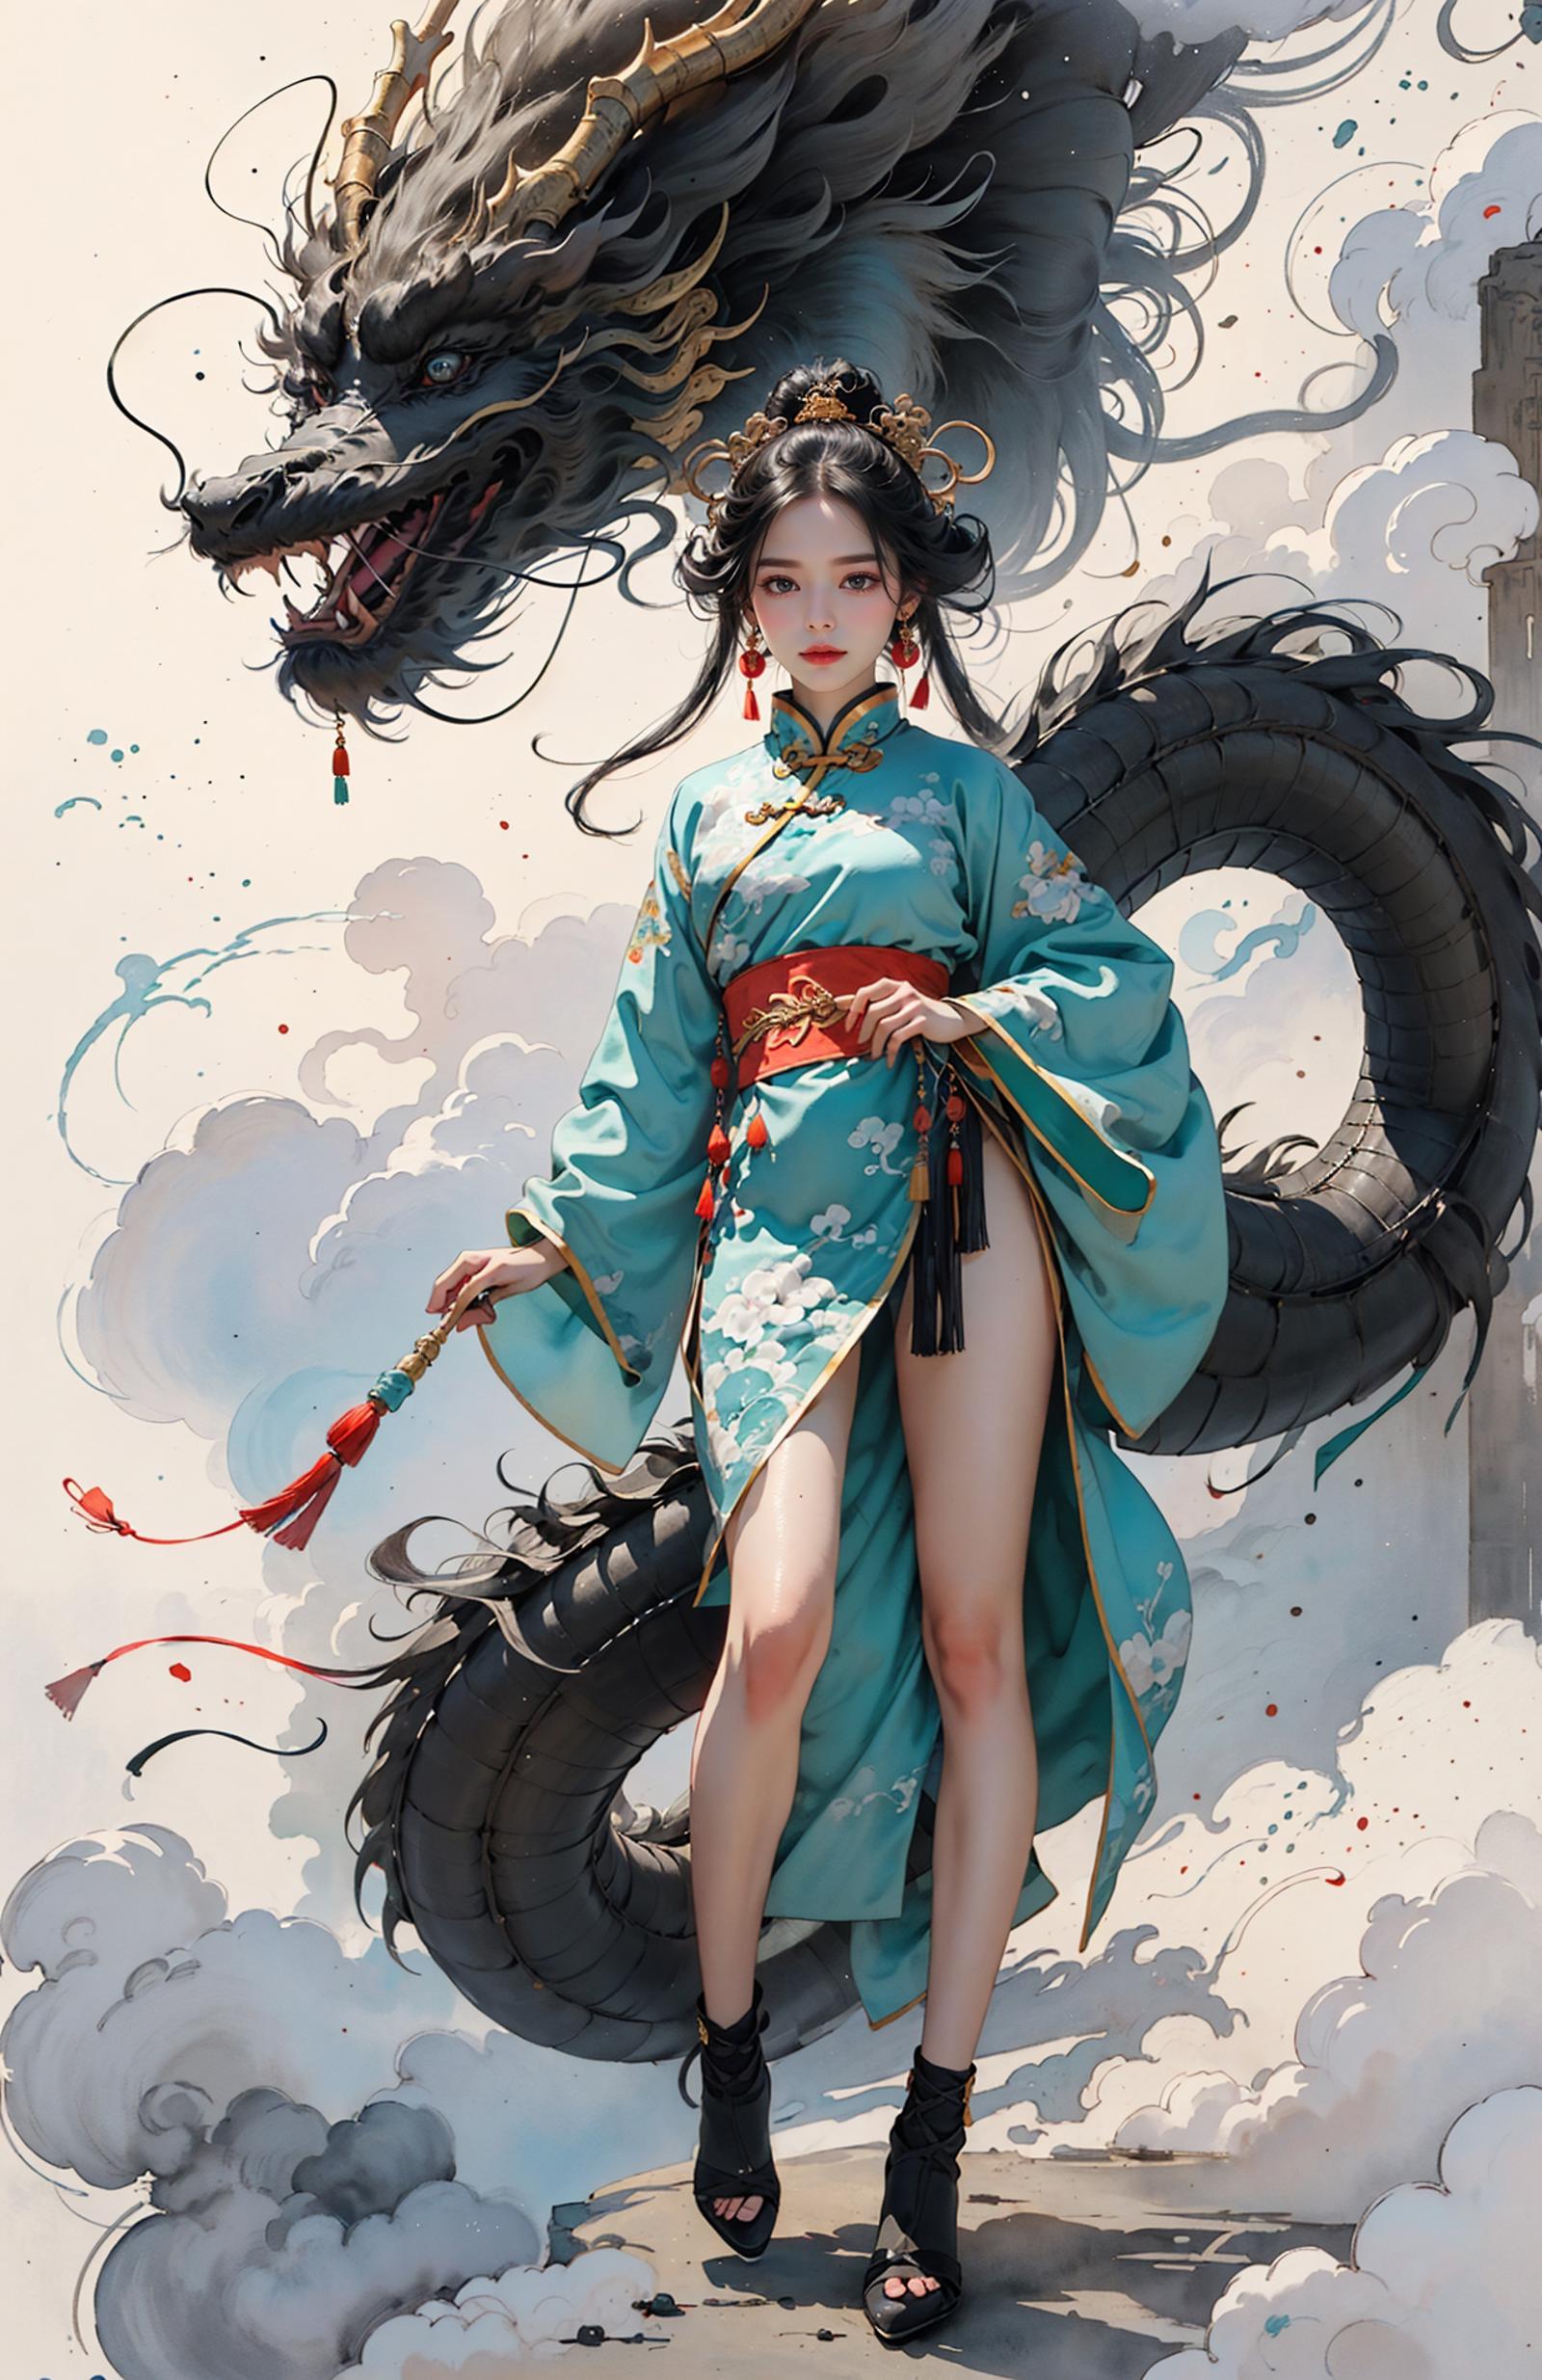 绪儿-水墨龙 Chinese dragon image by XRYCJ